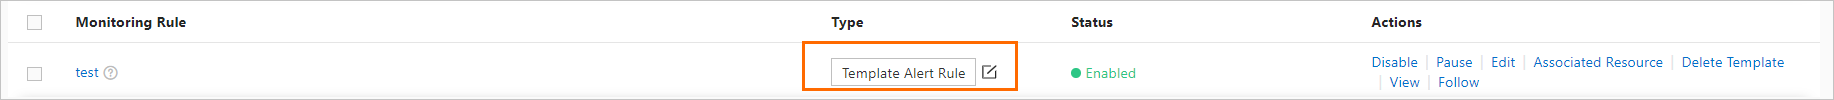 Alert monitoring rule template